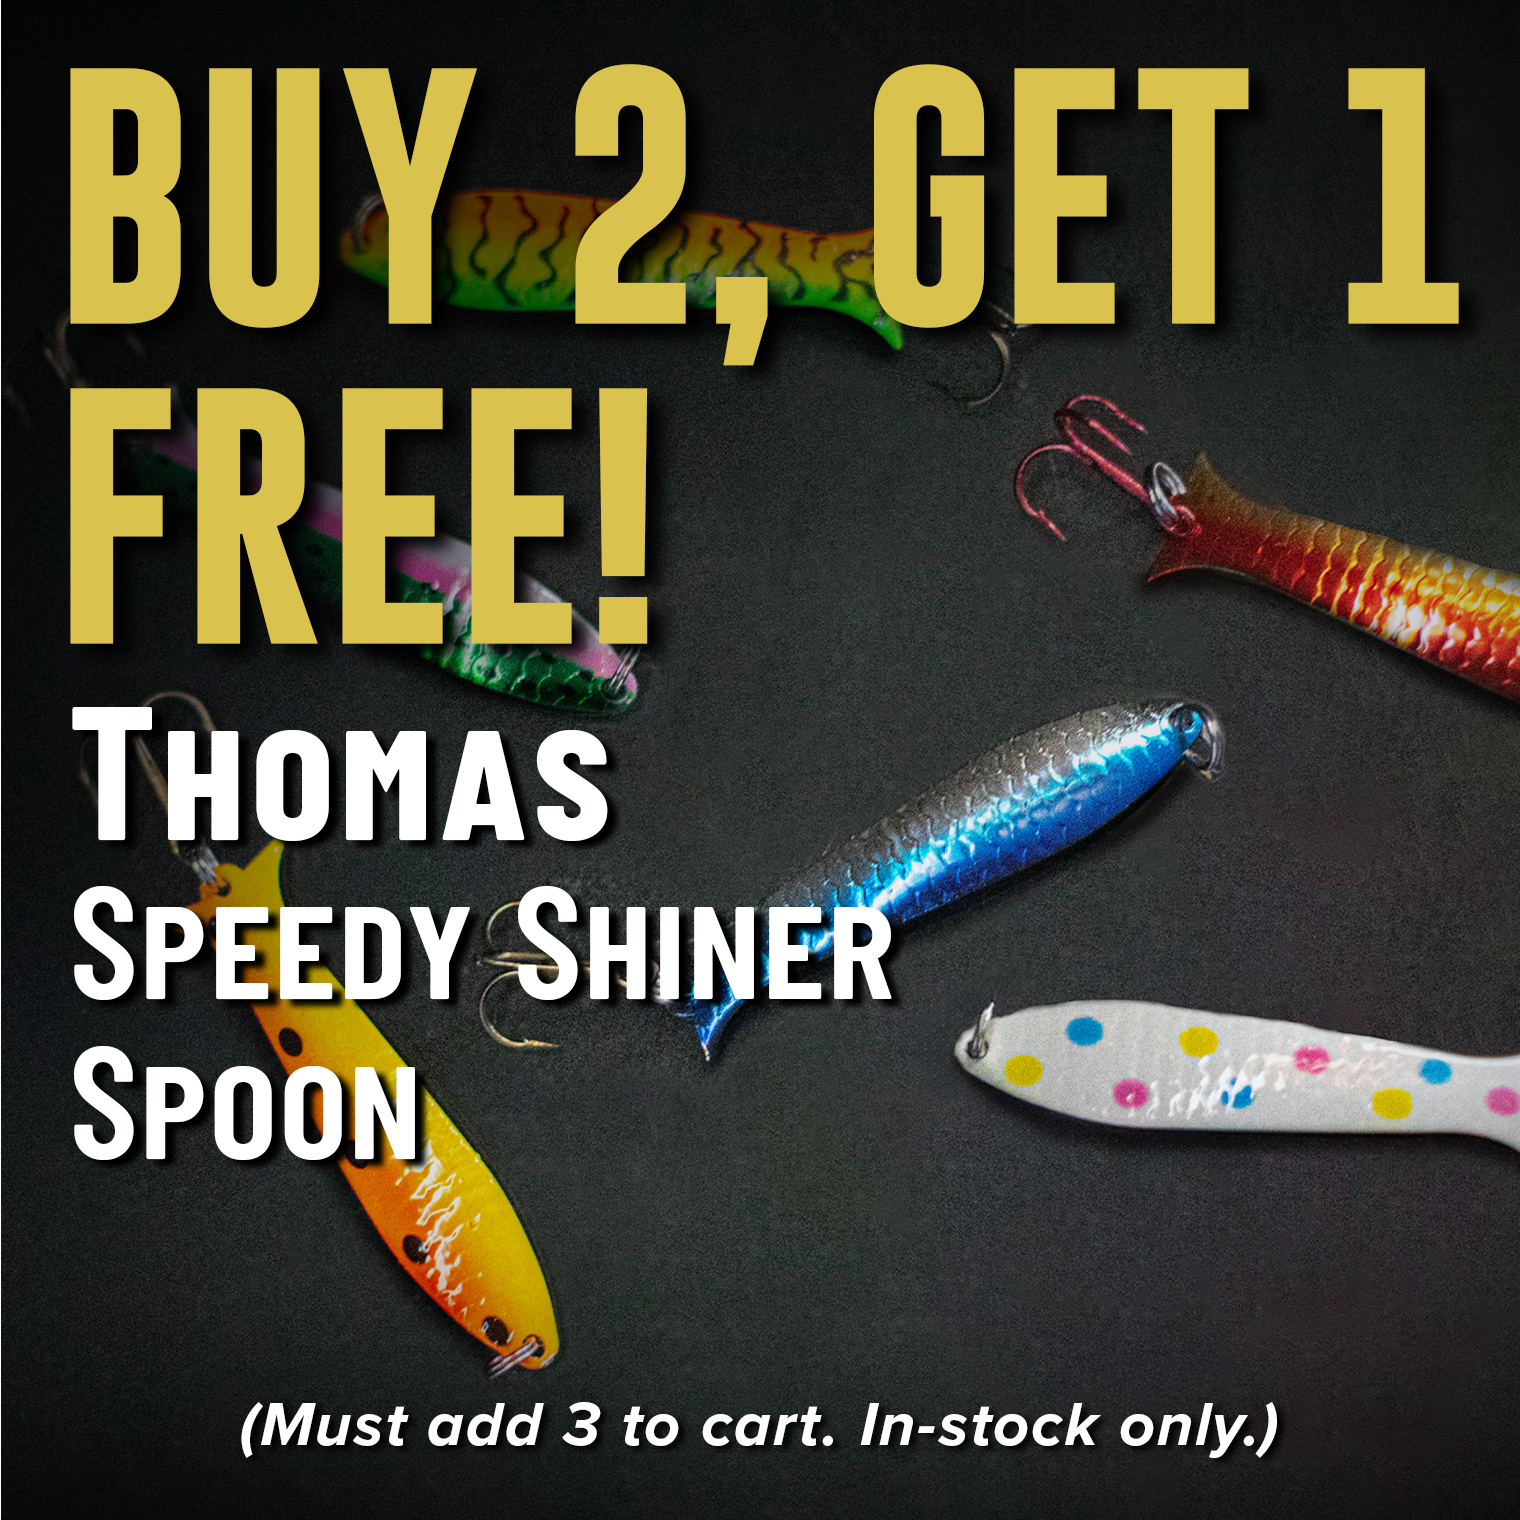 Buy 2, Get 1 Free! Thomas Speedy Shiner Spoon